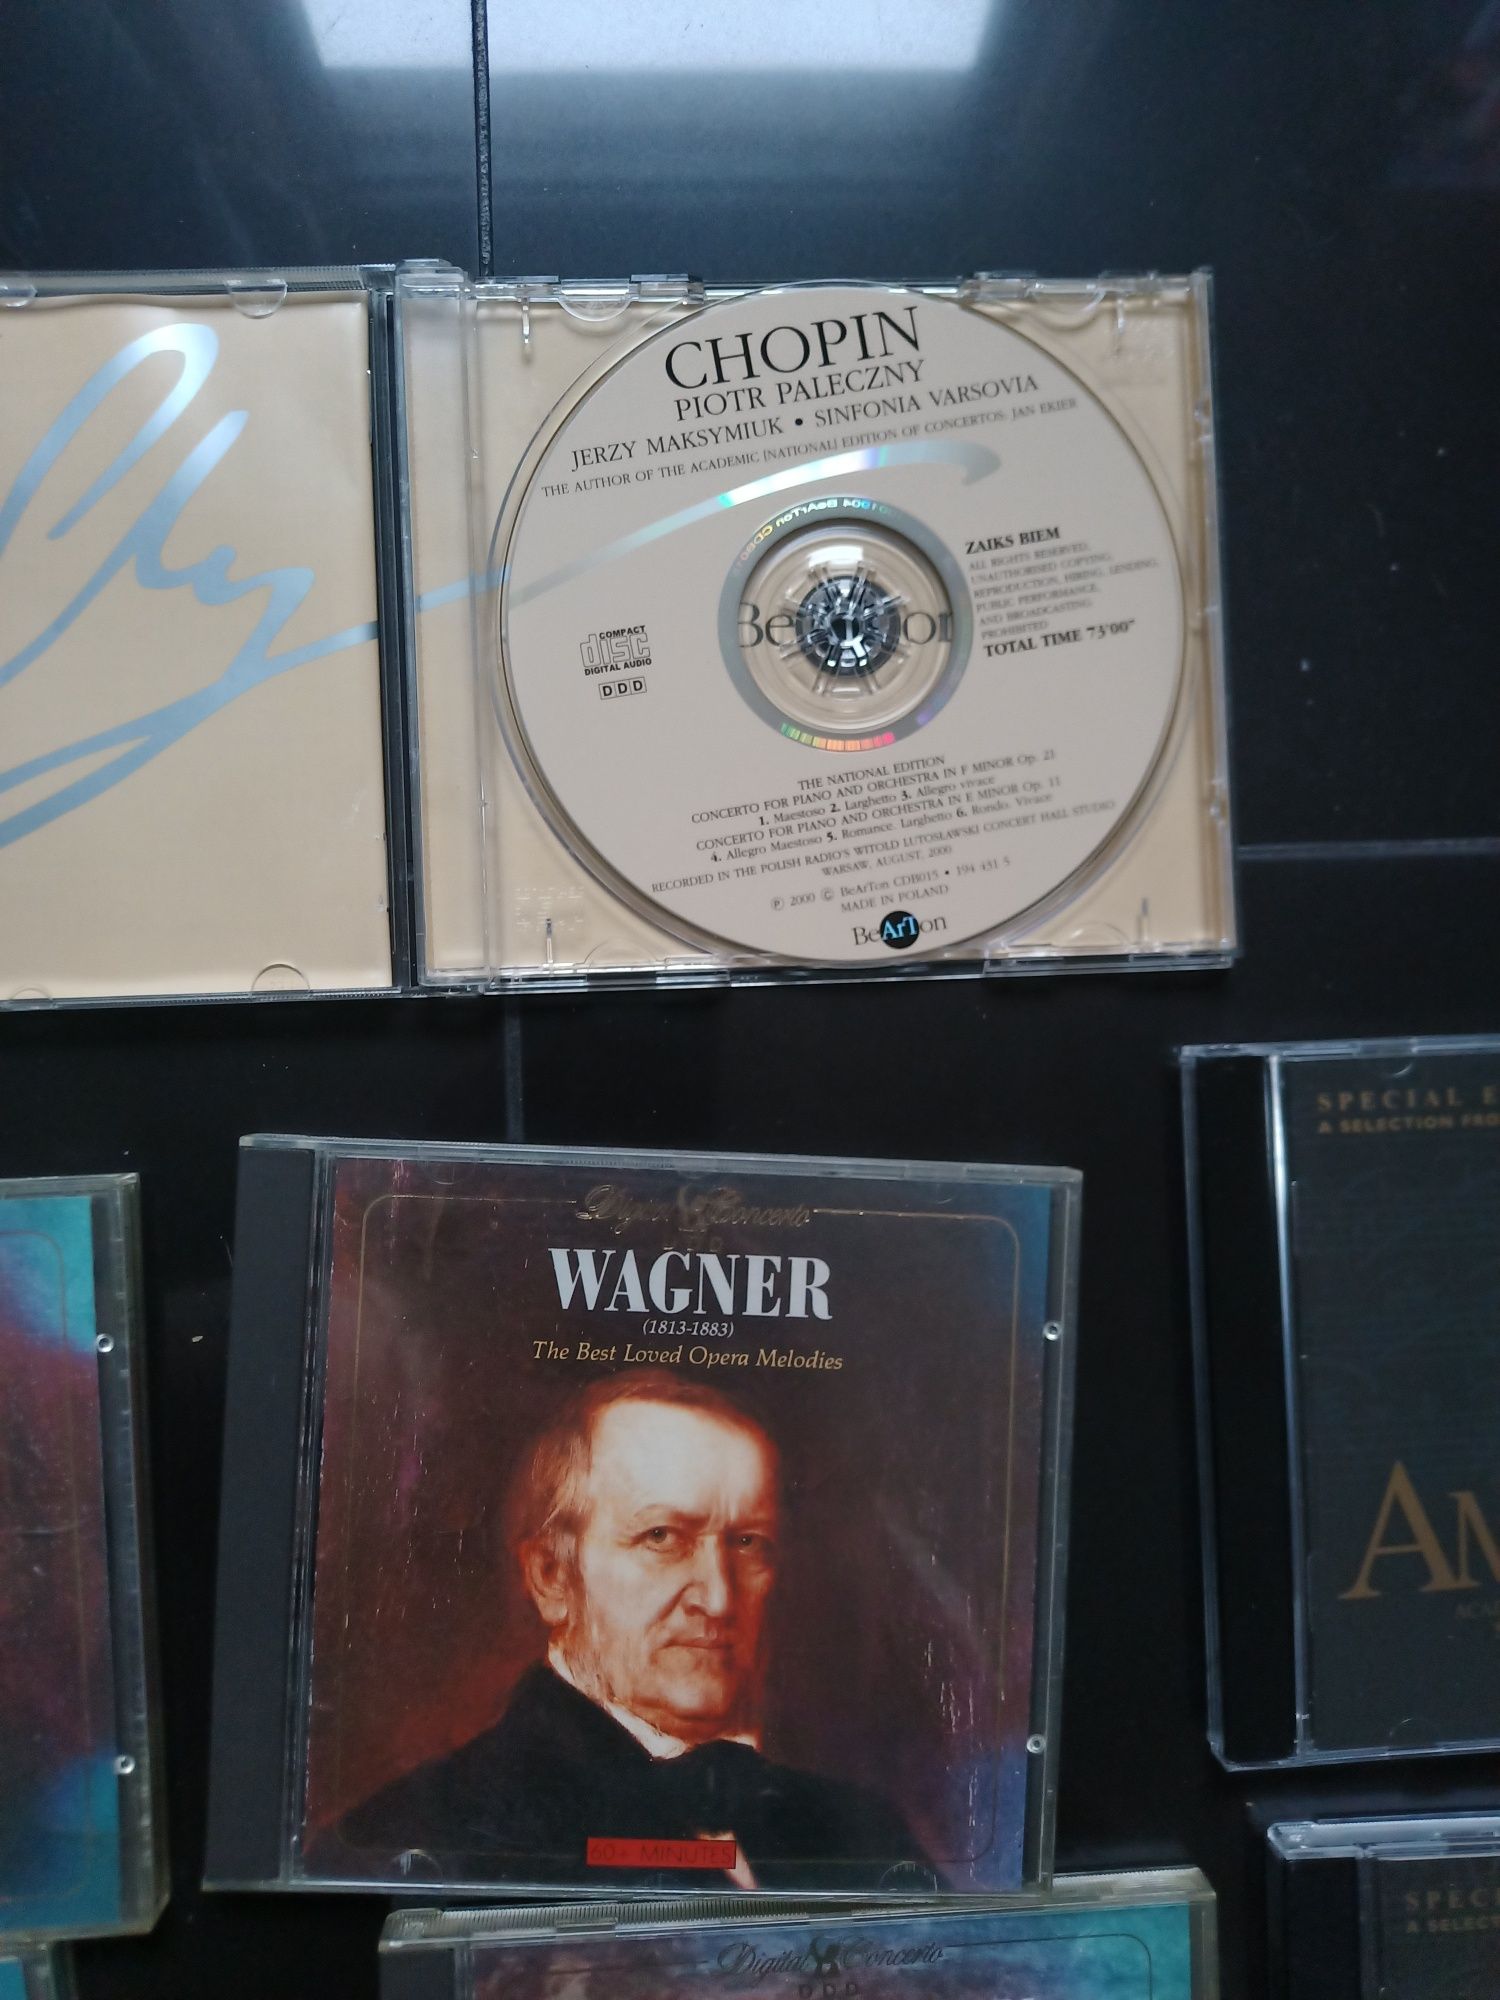 Muzyka poważna - 10 CD: Chopin, Mozart, Bach, Wagner i inni - komplet